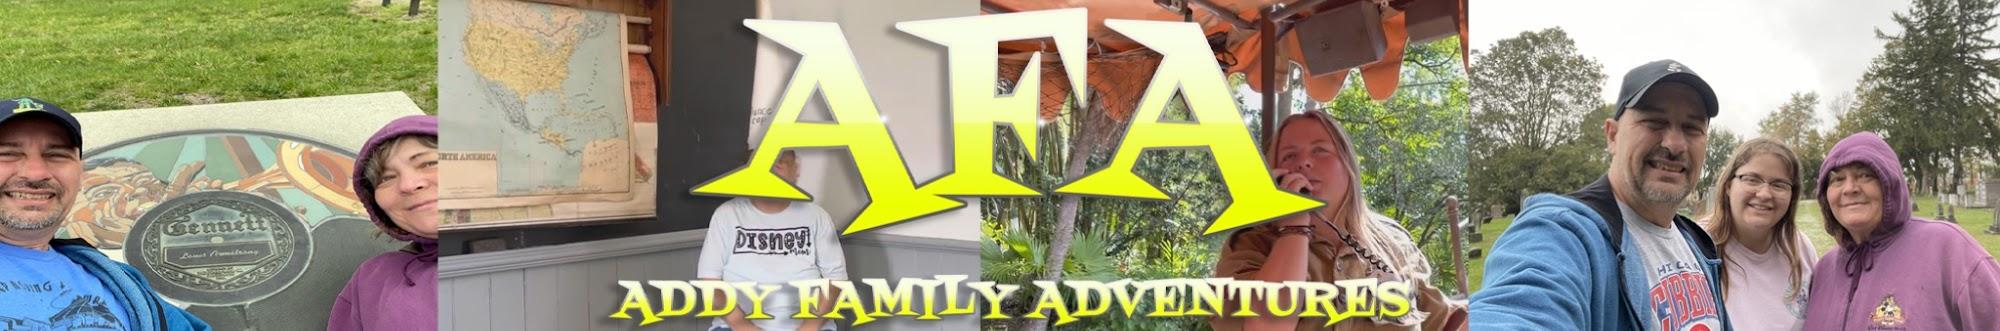 Addy Family Adventures